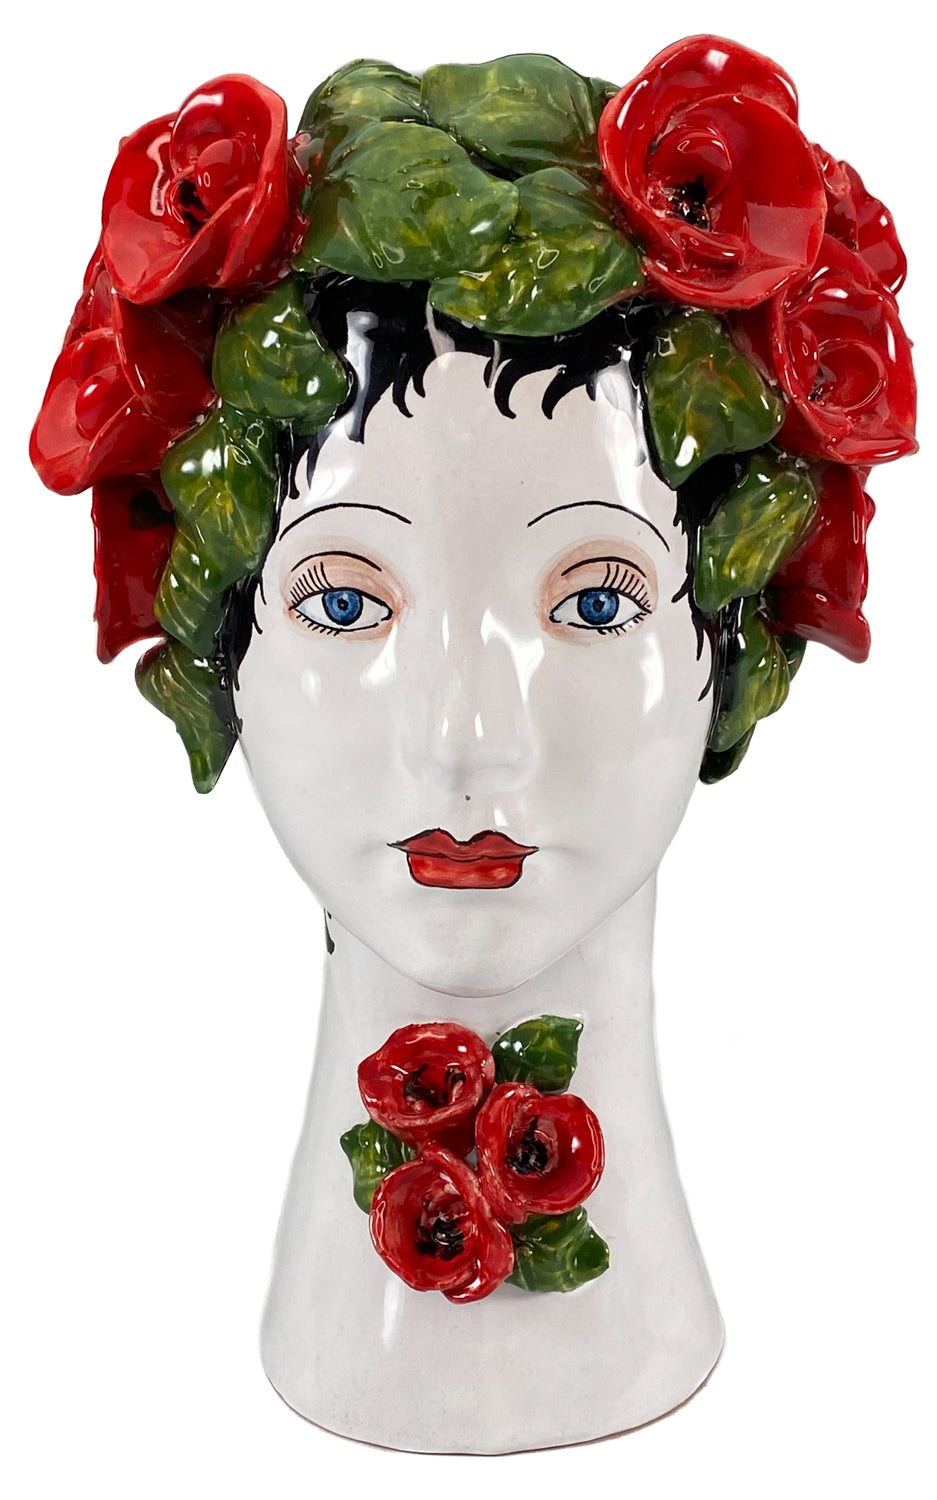 Virginia Casa "Donatello" Lady Figure - Poppies